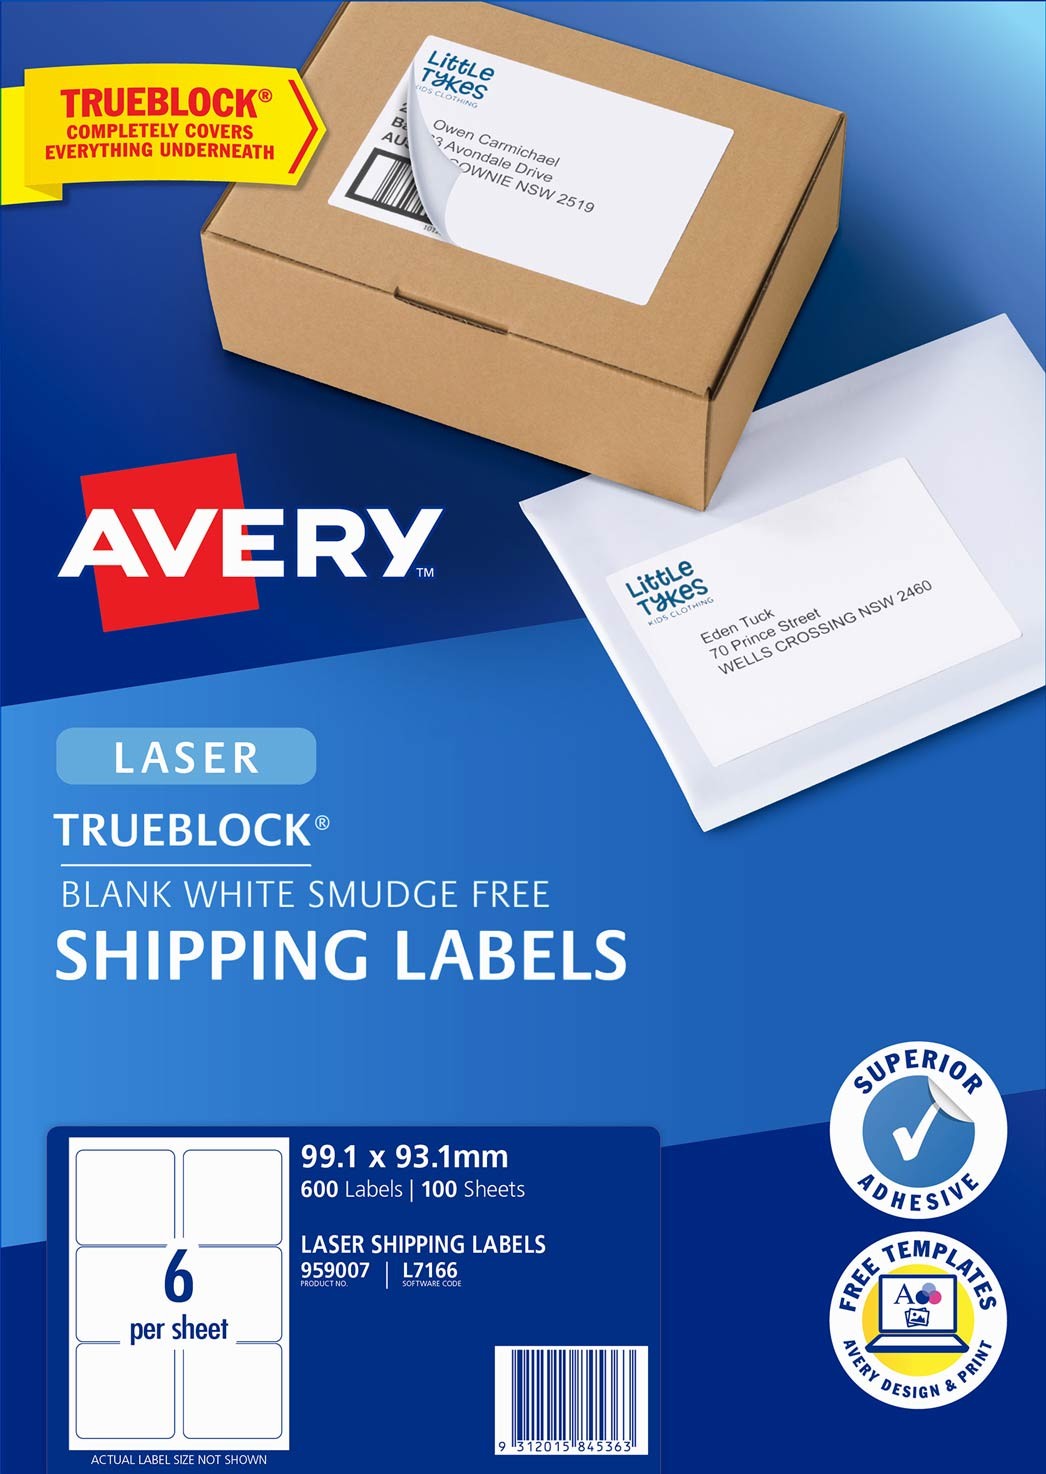 Shipping Labels with Trueblock 959007 Avery Australia